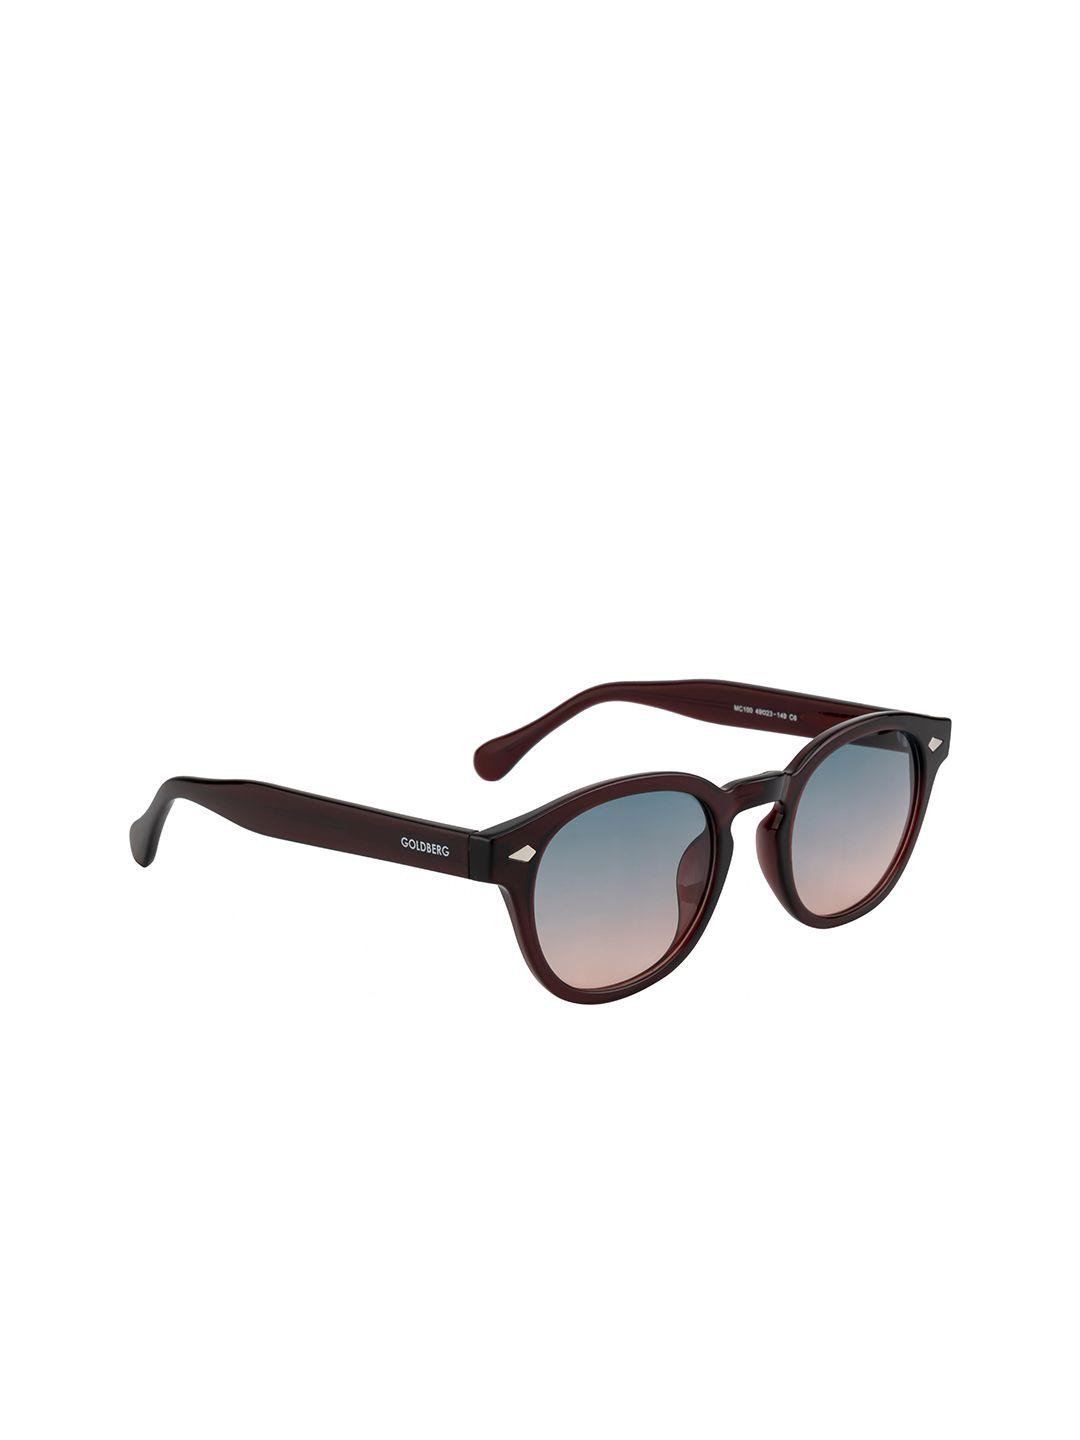 gold berg unisex pink lens & red wayfarer sunglasses with uv protected lens gb-100_c6